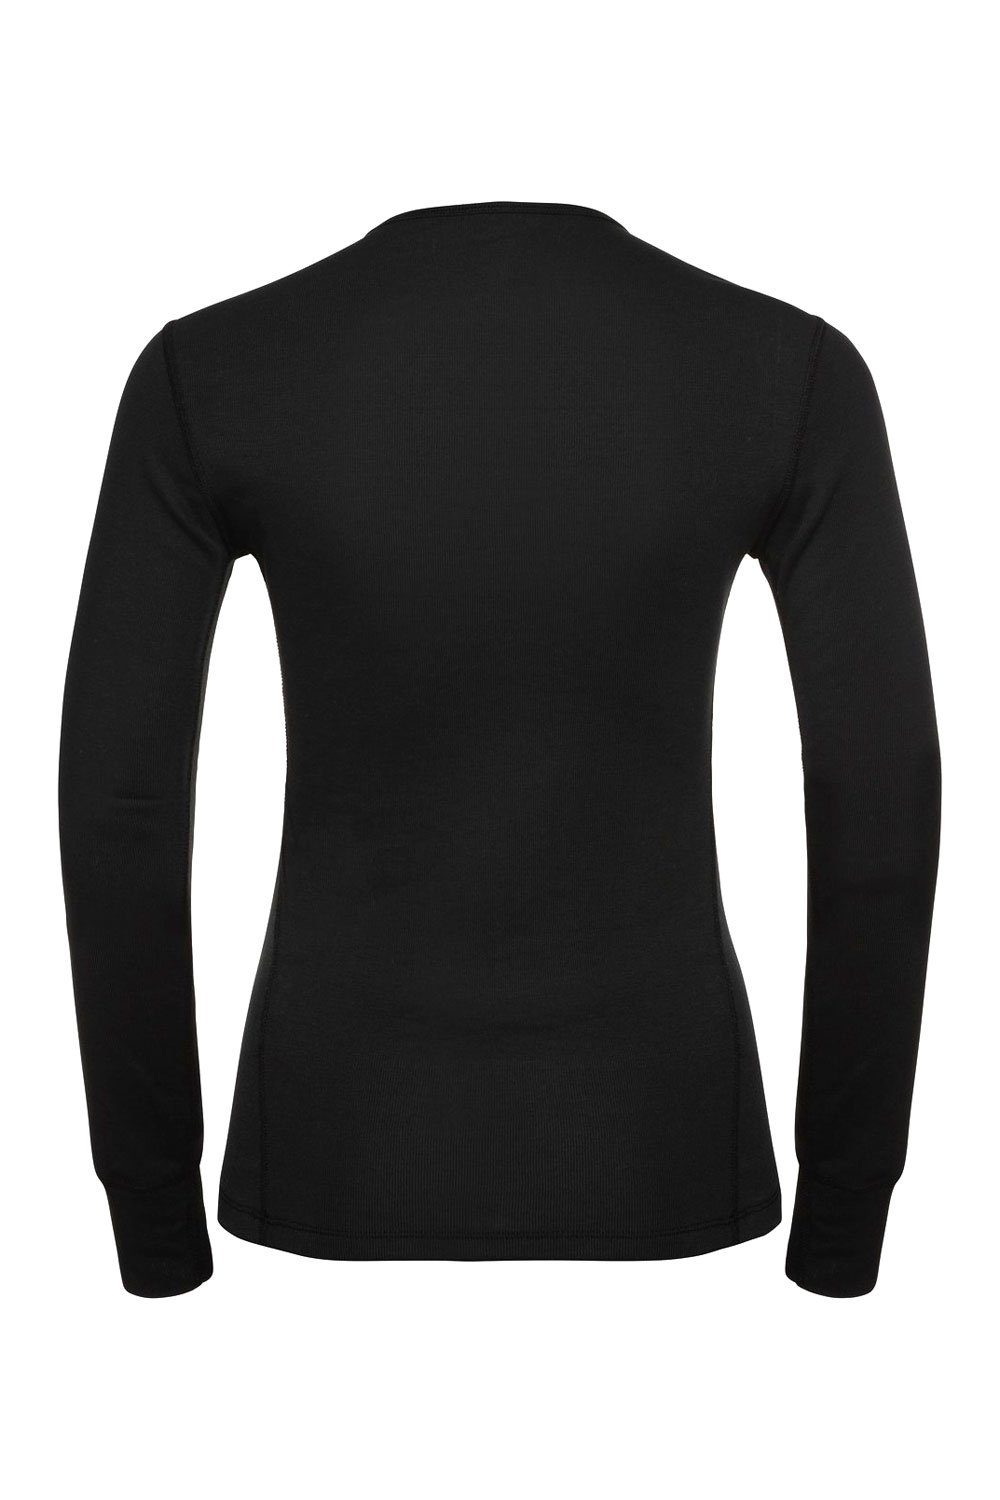 Odlo Funktionsshirt black Shirt langarm, Eco 159101 warm